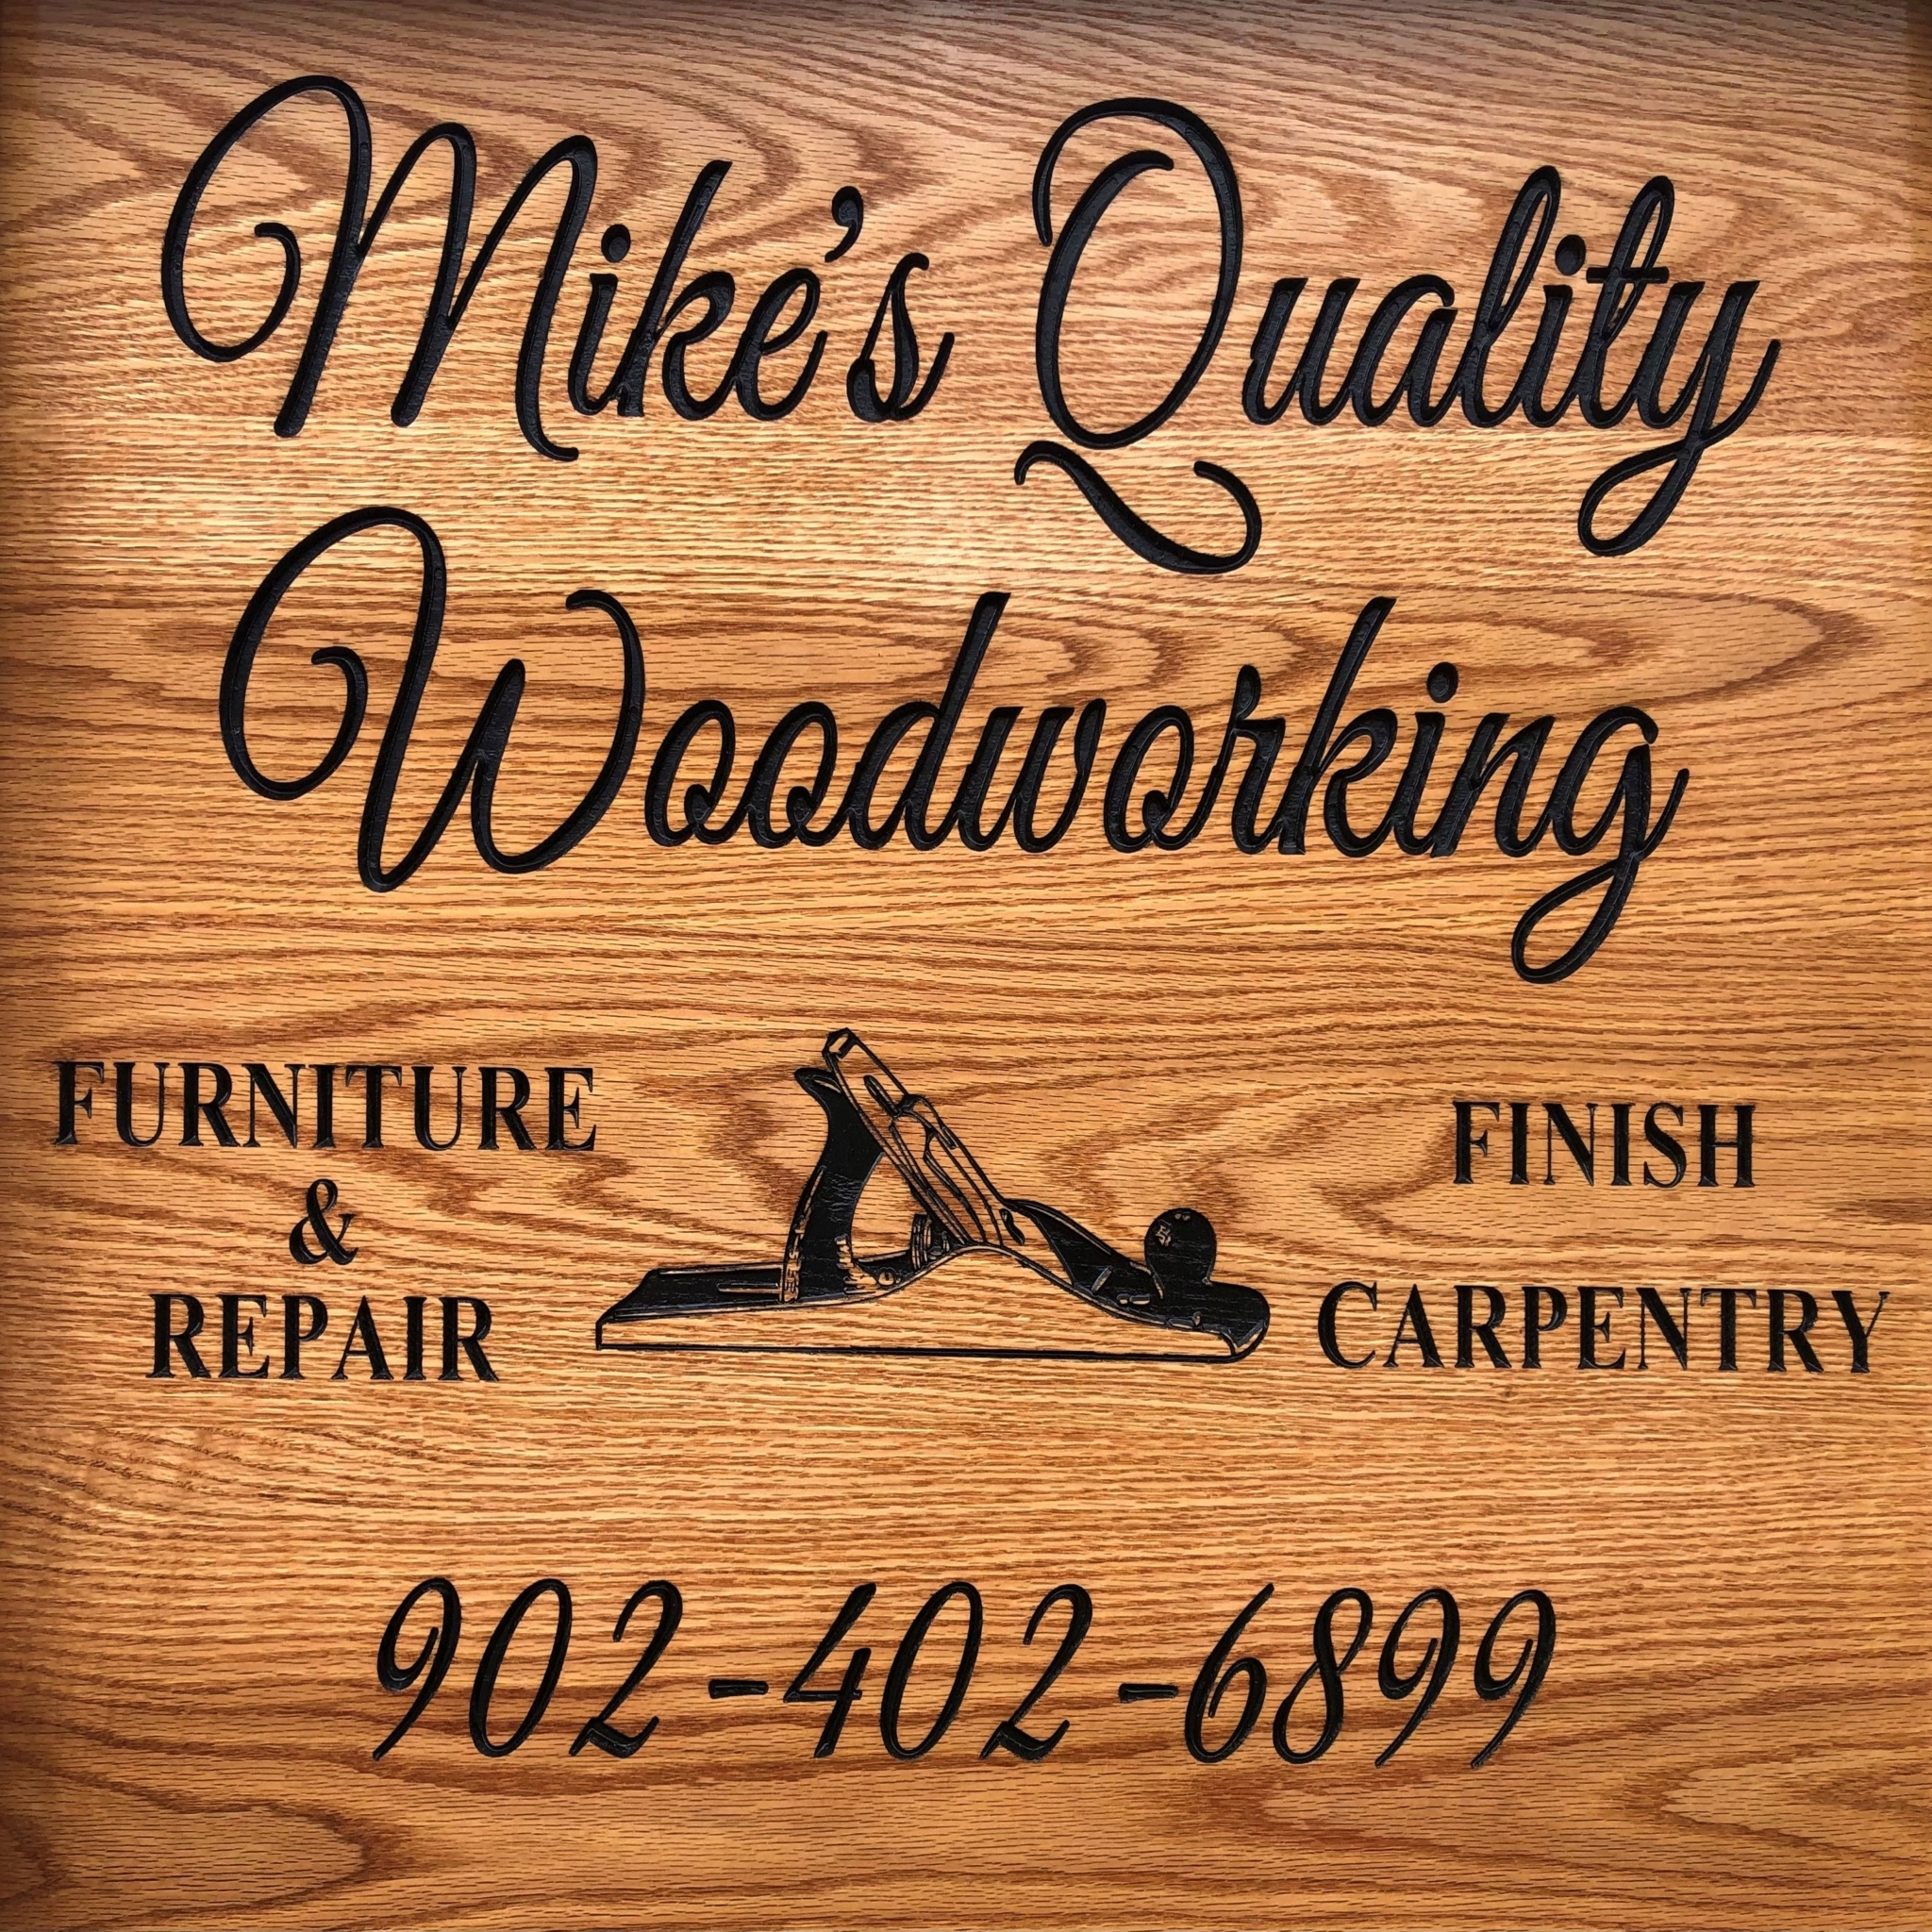 Mike's Quality Woodworking - Charpentiers et travaux de charpenterie